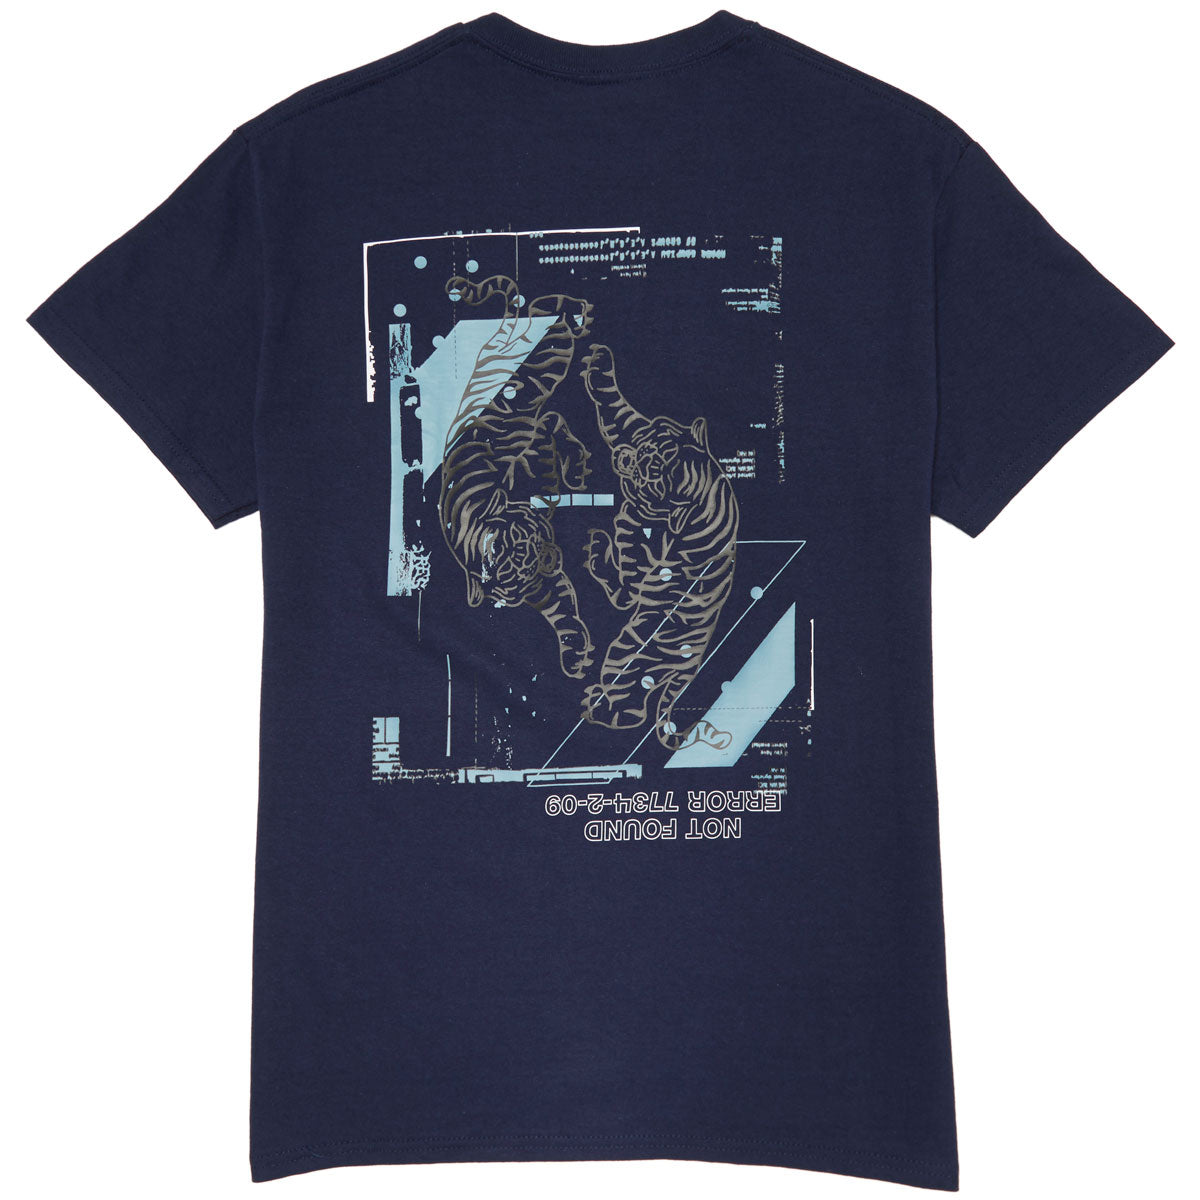 Lo-Res Labor T-Shirt - Navy image 1